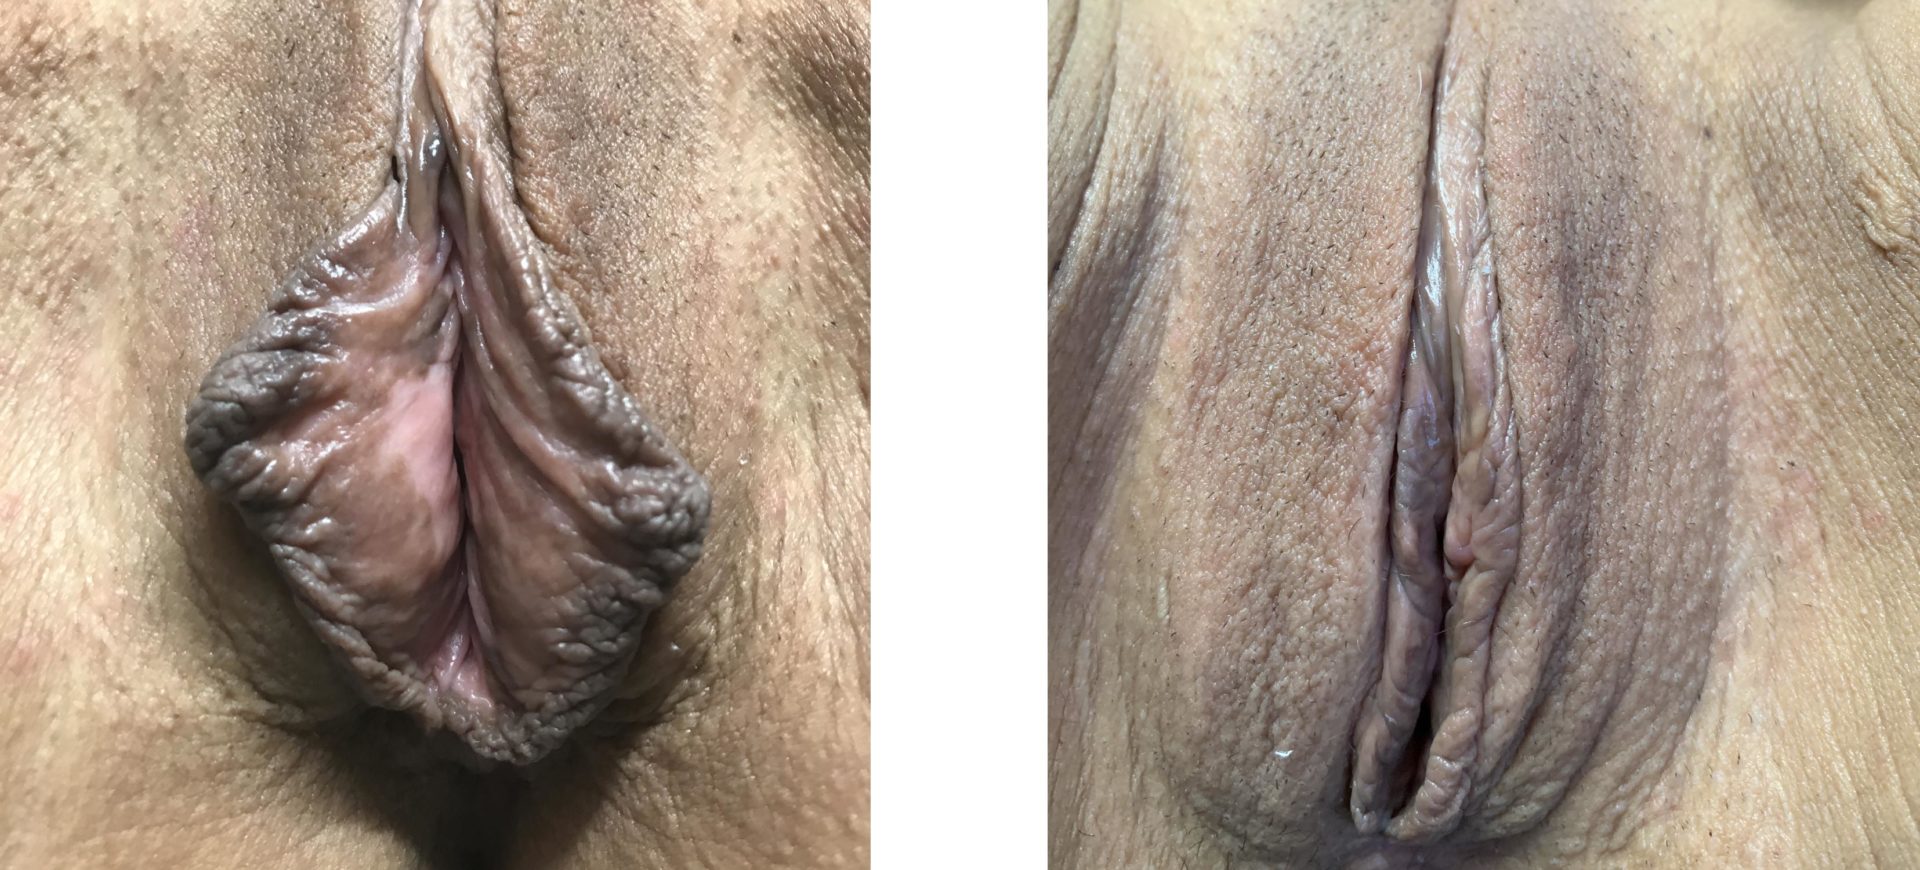 Labiaplasty Minora and Vaginoplasty